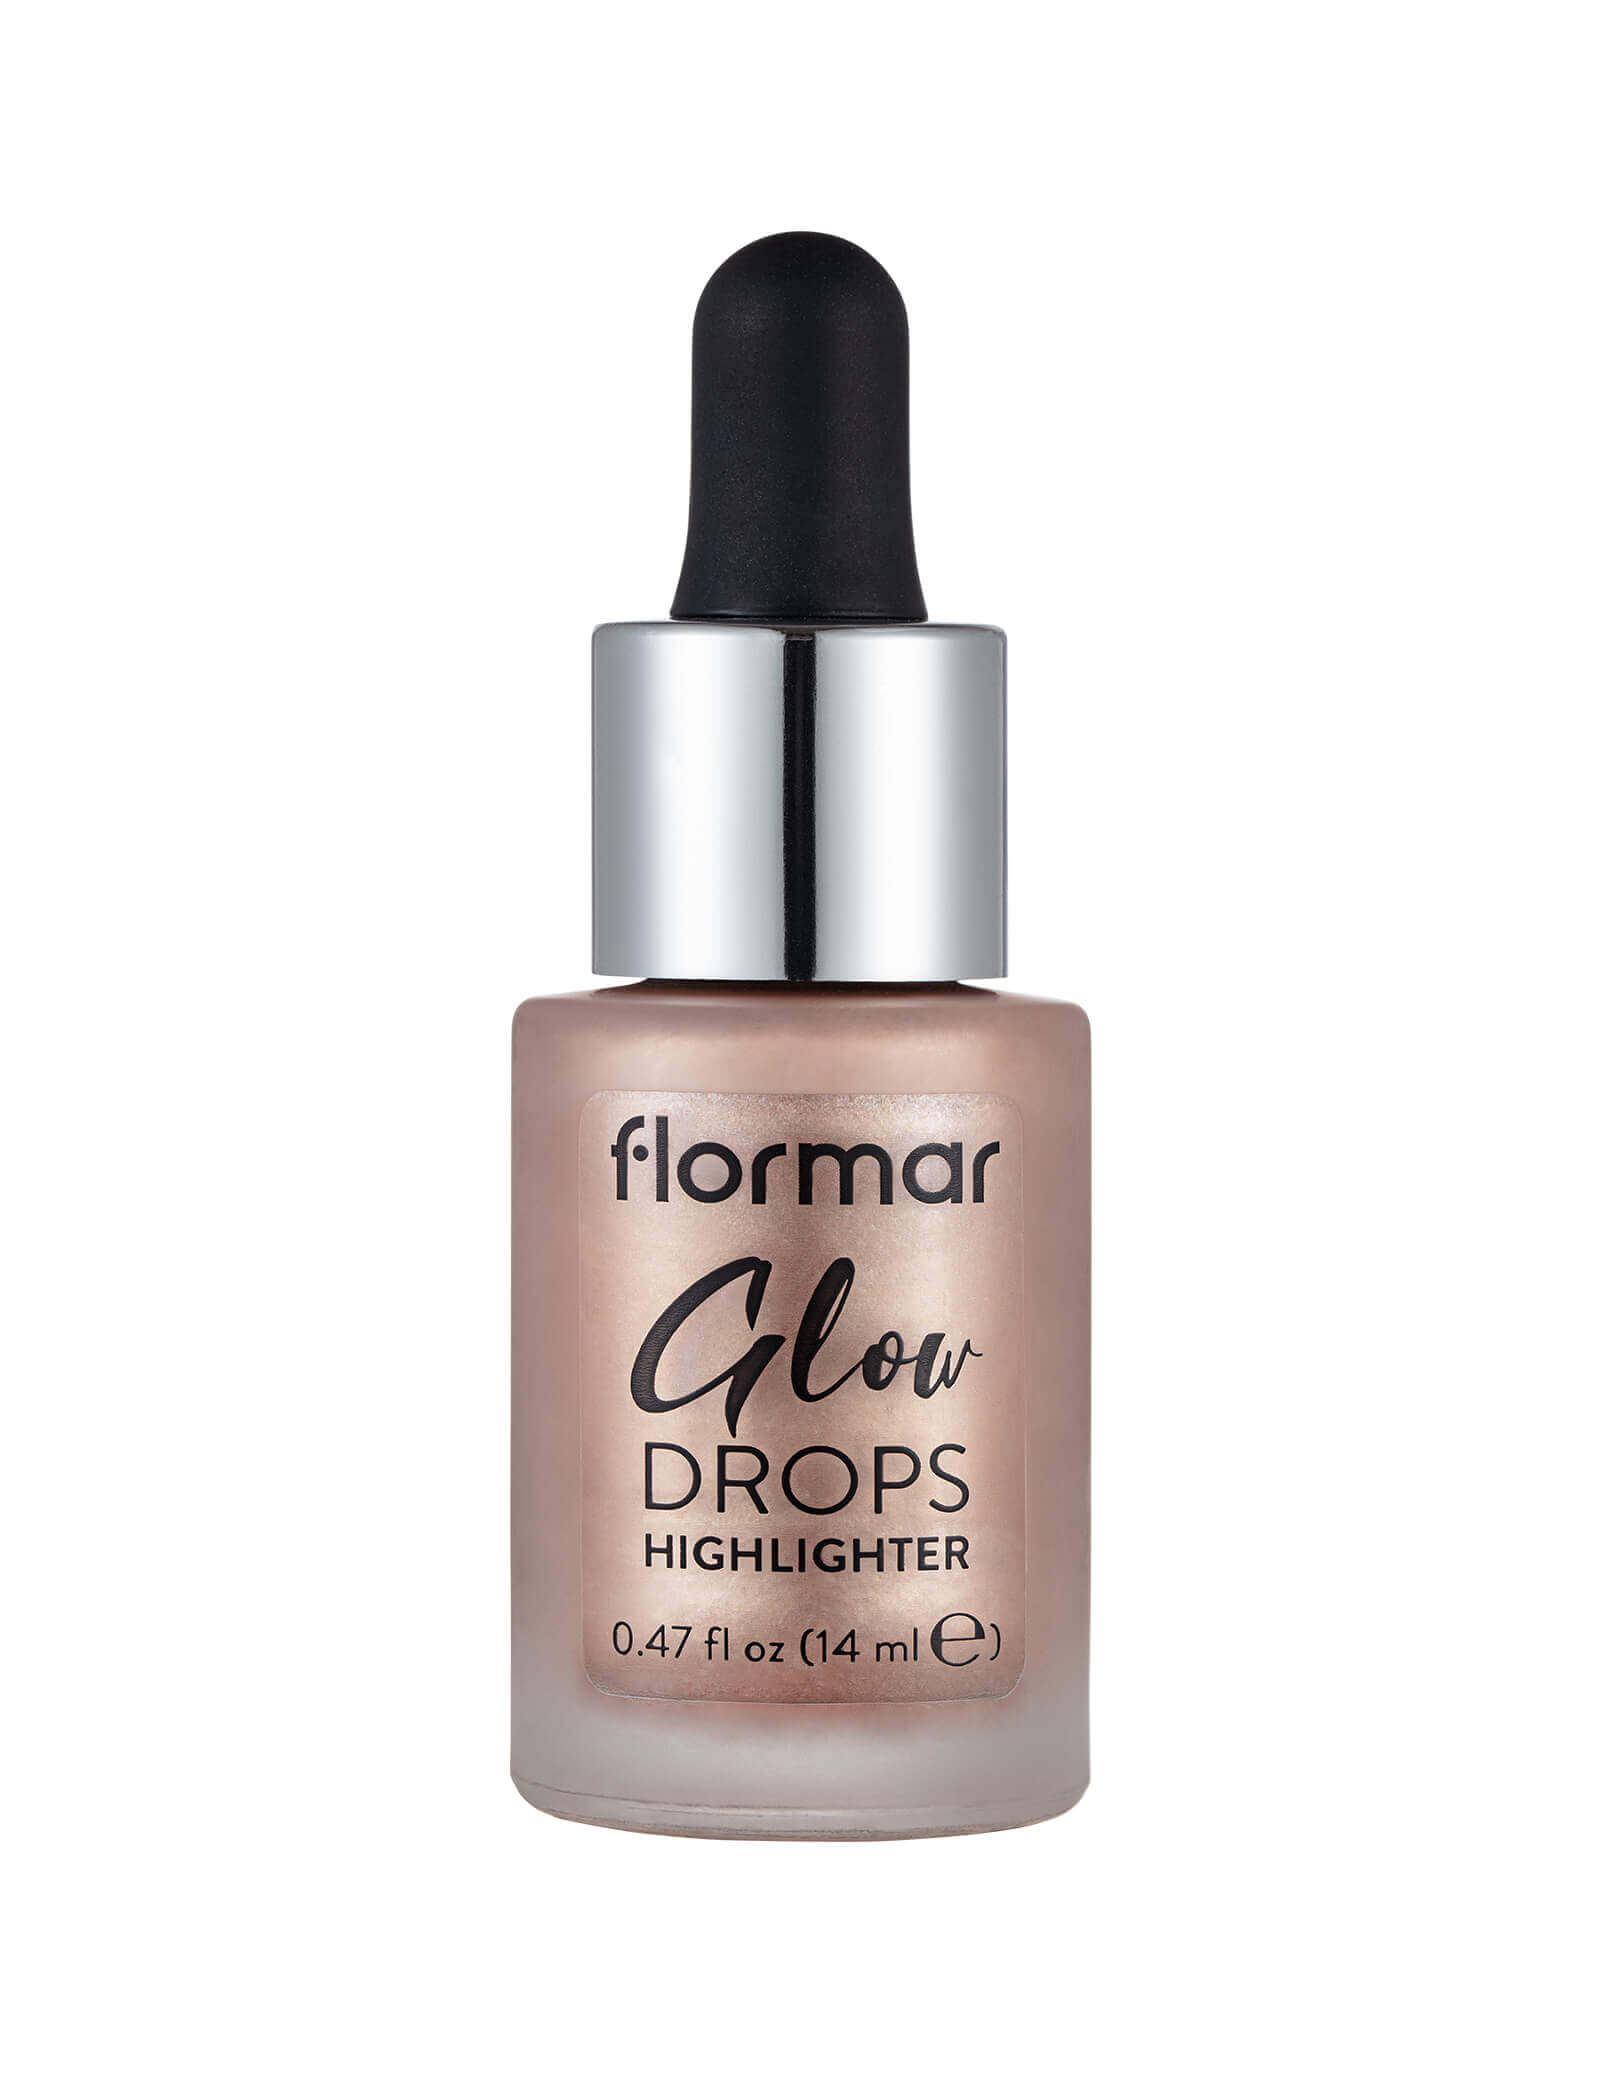 Flormar Glow Drops Highlighter - 02